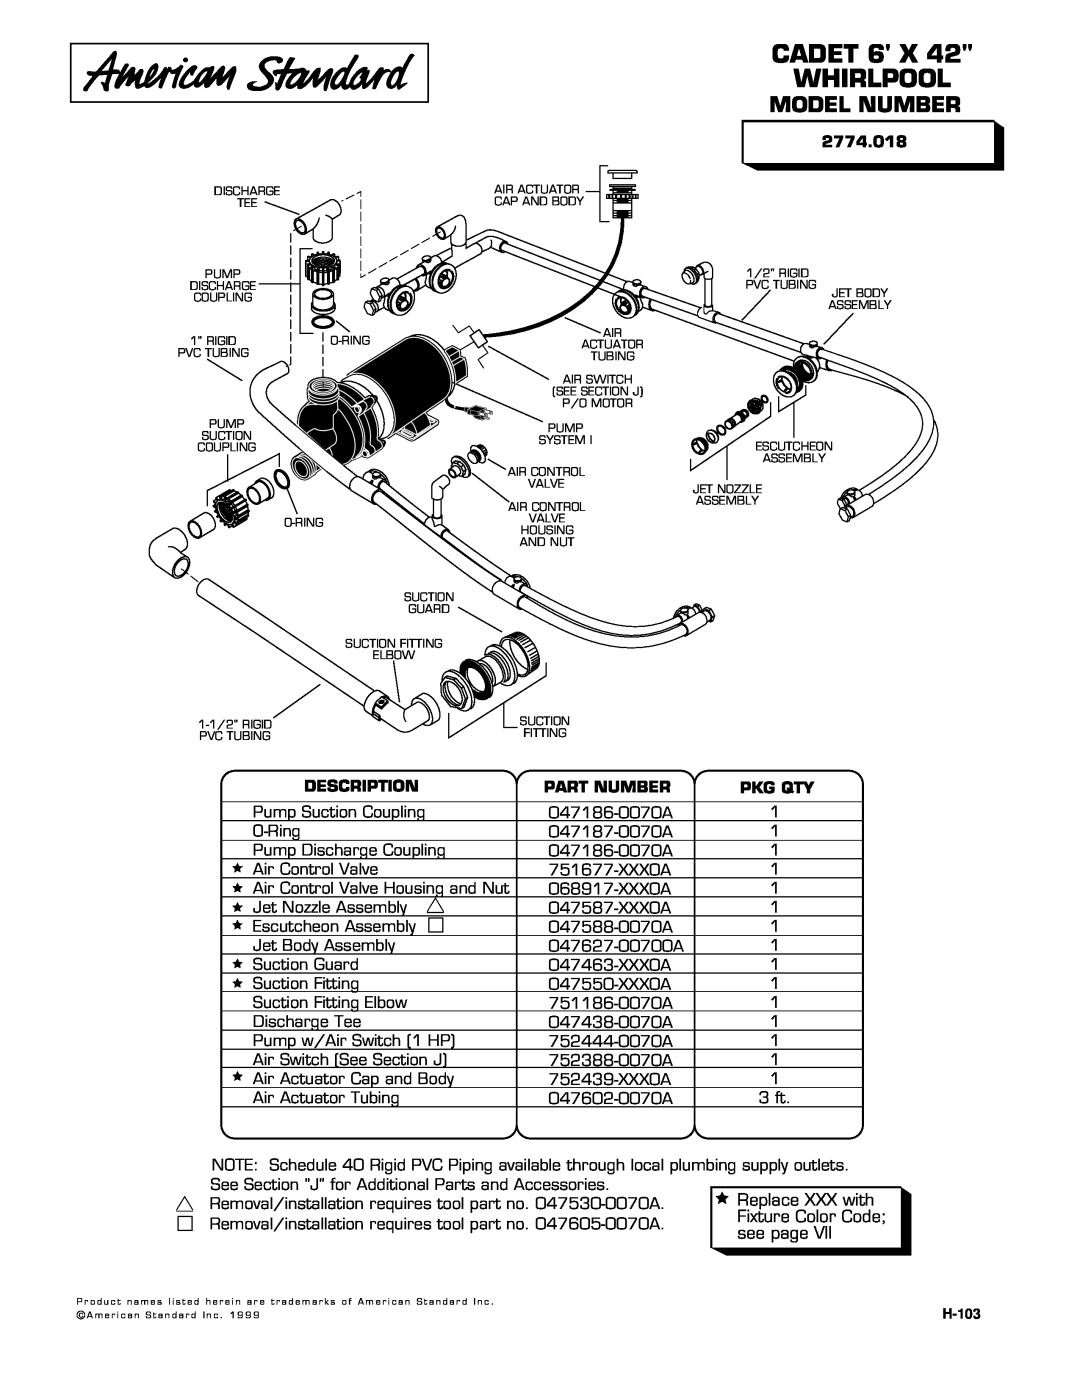 American Standard 2774.018 manual CADET 6 X WHIRLPOOL, Model Number, Description, Part Number, Pkg Qty 